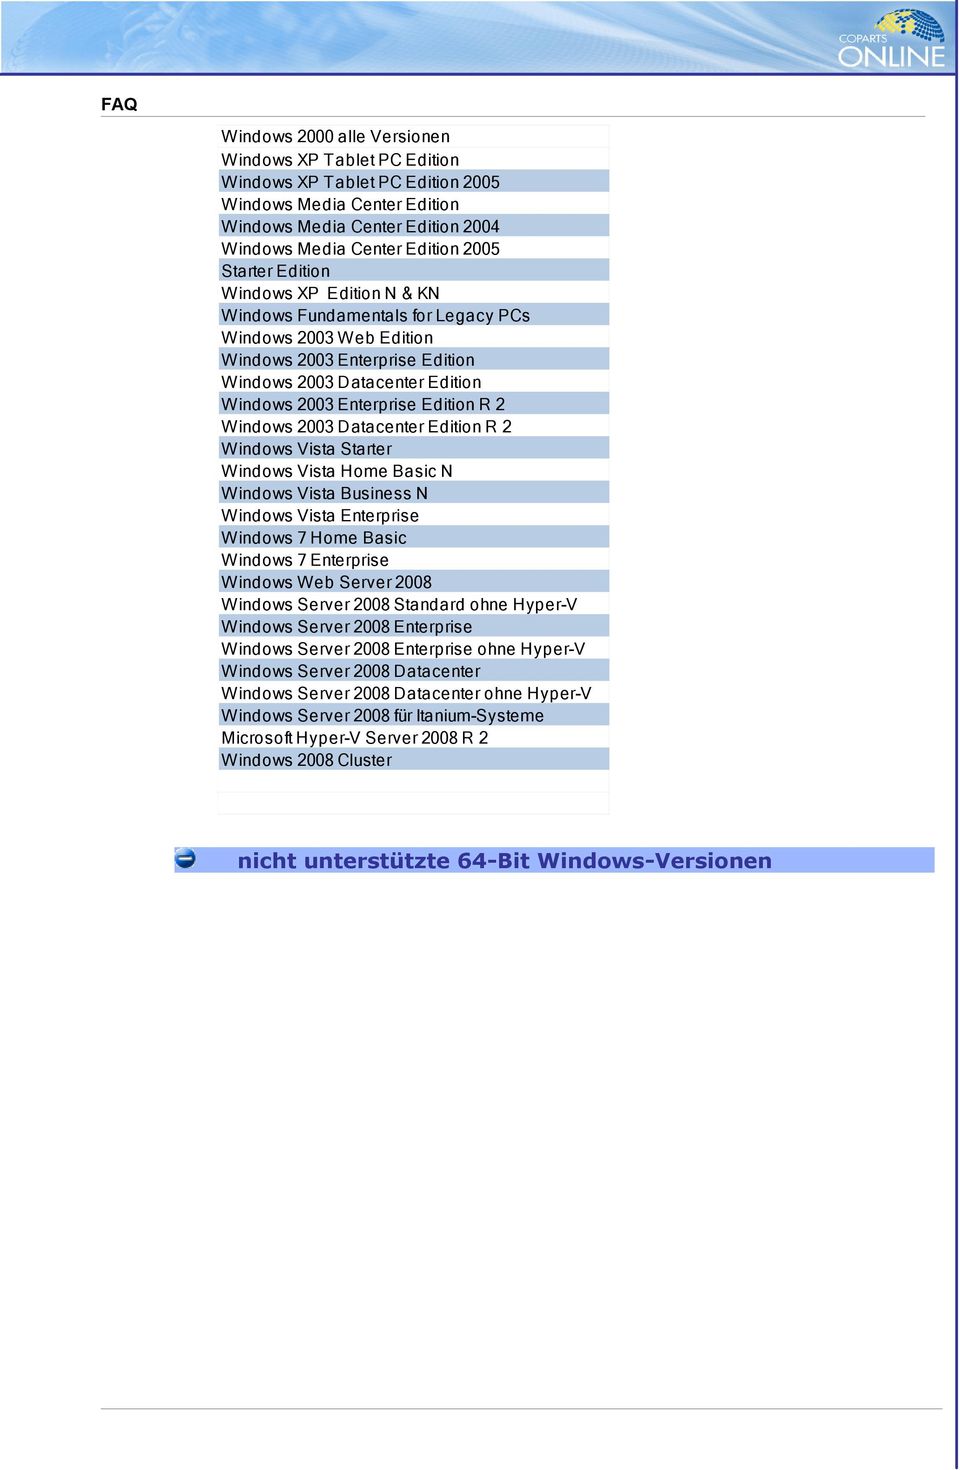 Windows 2003 Datacenter Edition R 2 Windows Vista Starter Windows Vista Home Basic N Windows Vista Business N Windows Vista Enterprise Windows 7 Home Basic Windows 7 Enterprise Windows Web Server